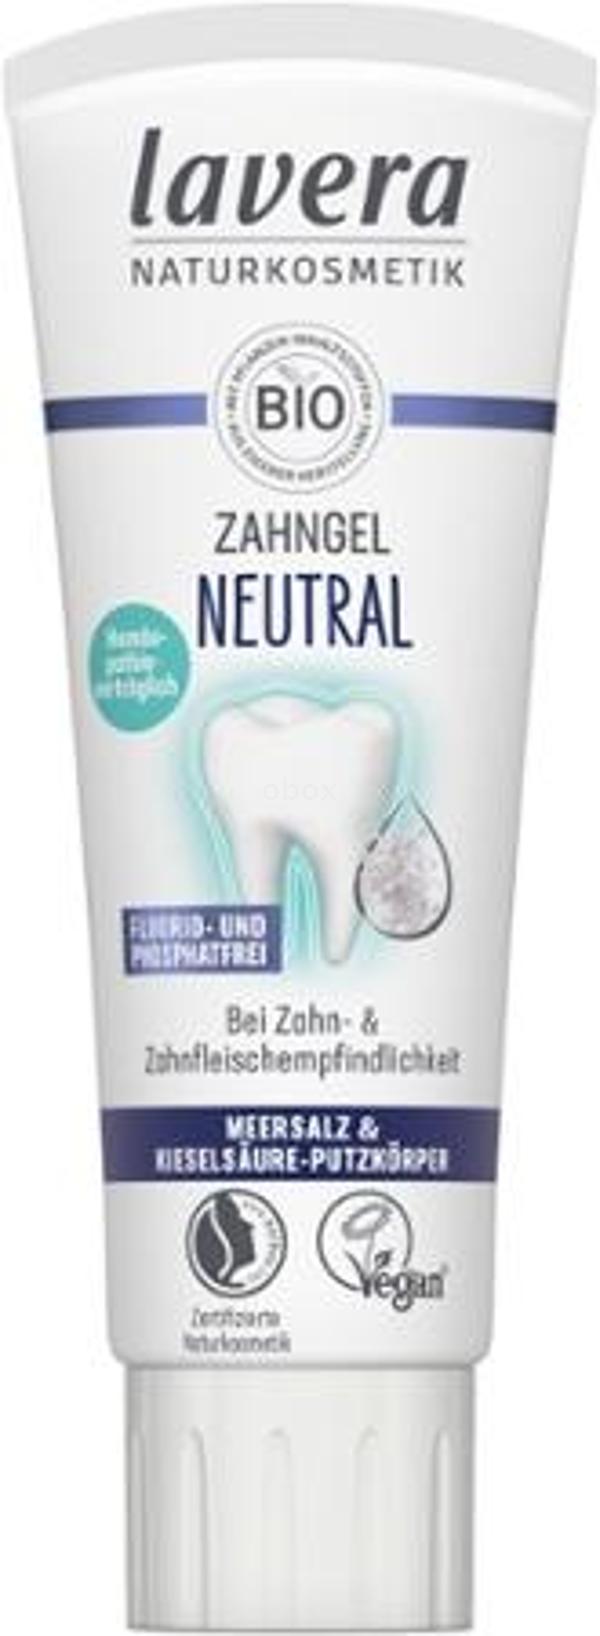 Produktfoto zu Zahngel neutral Lavera 75ml